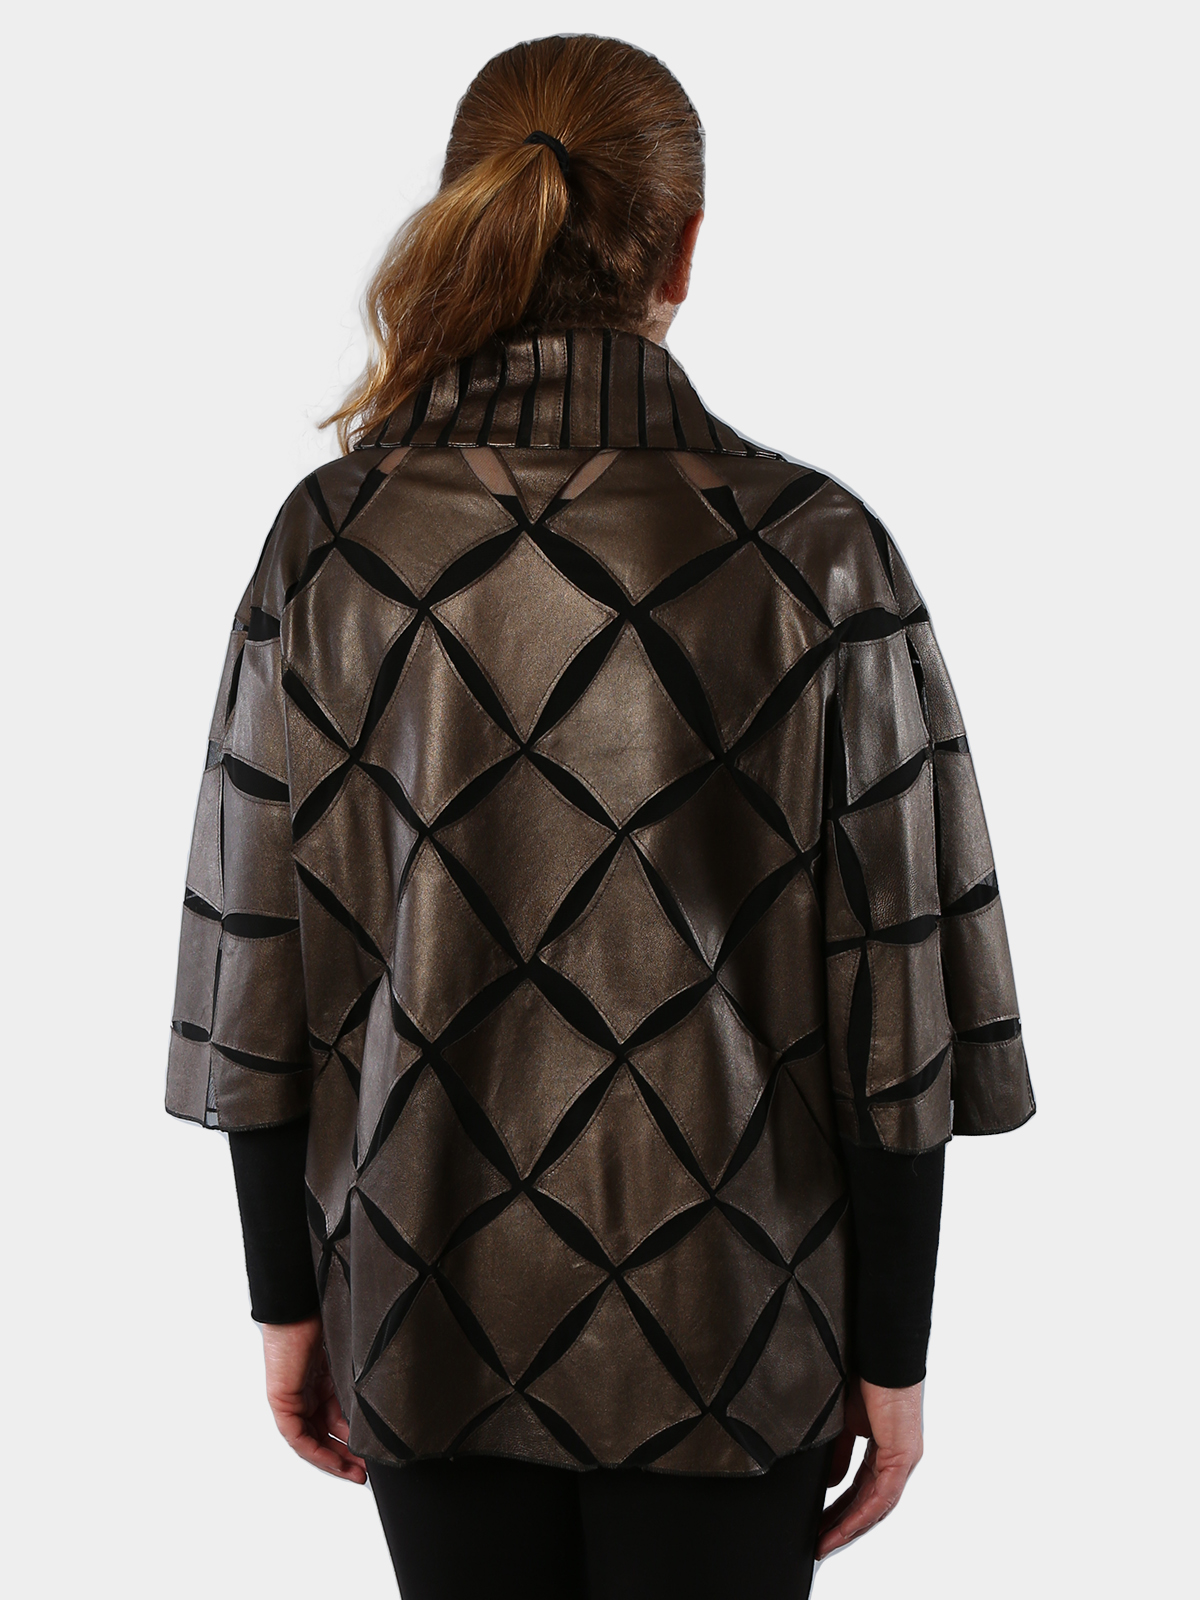 Bronze Leather and Black Mesh Jacket (Women's XL) - Estate Furs